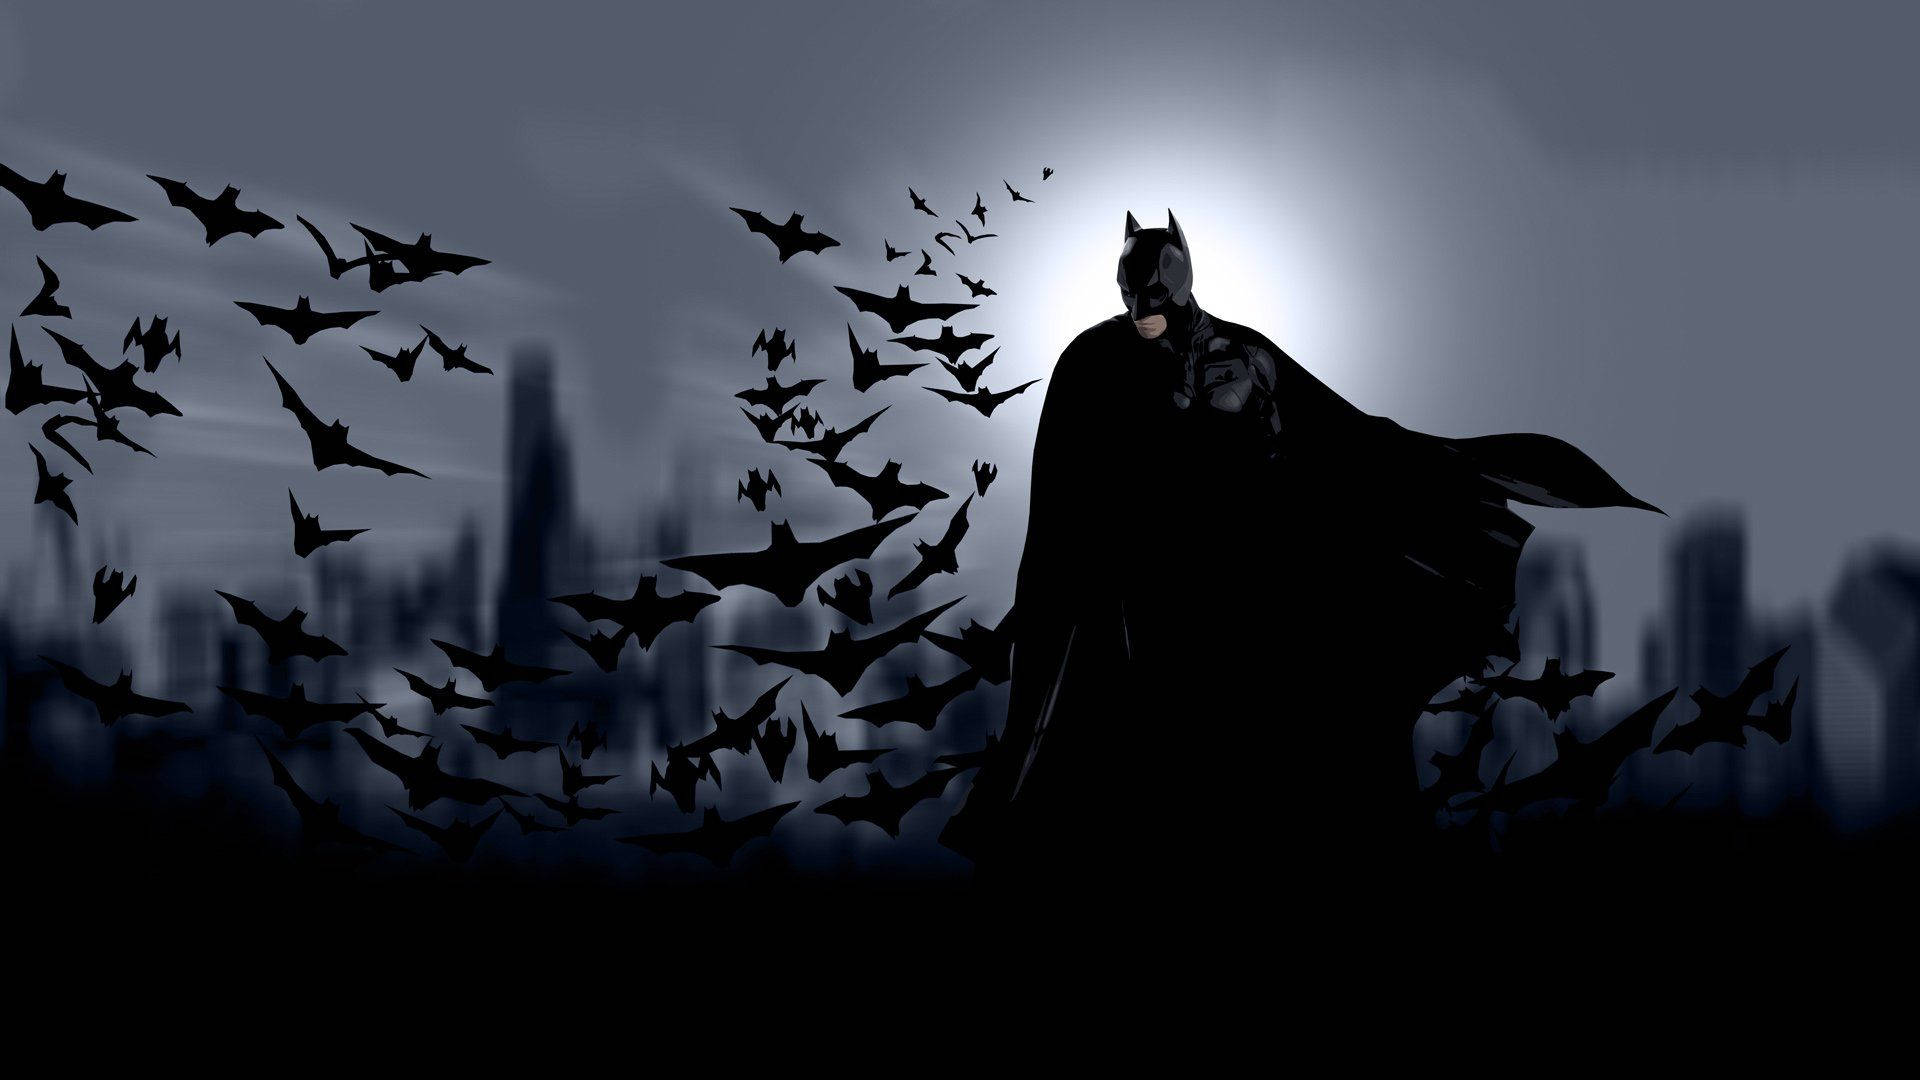 Batman Backgrounds